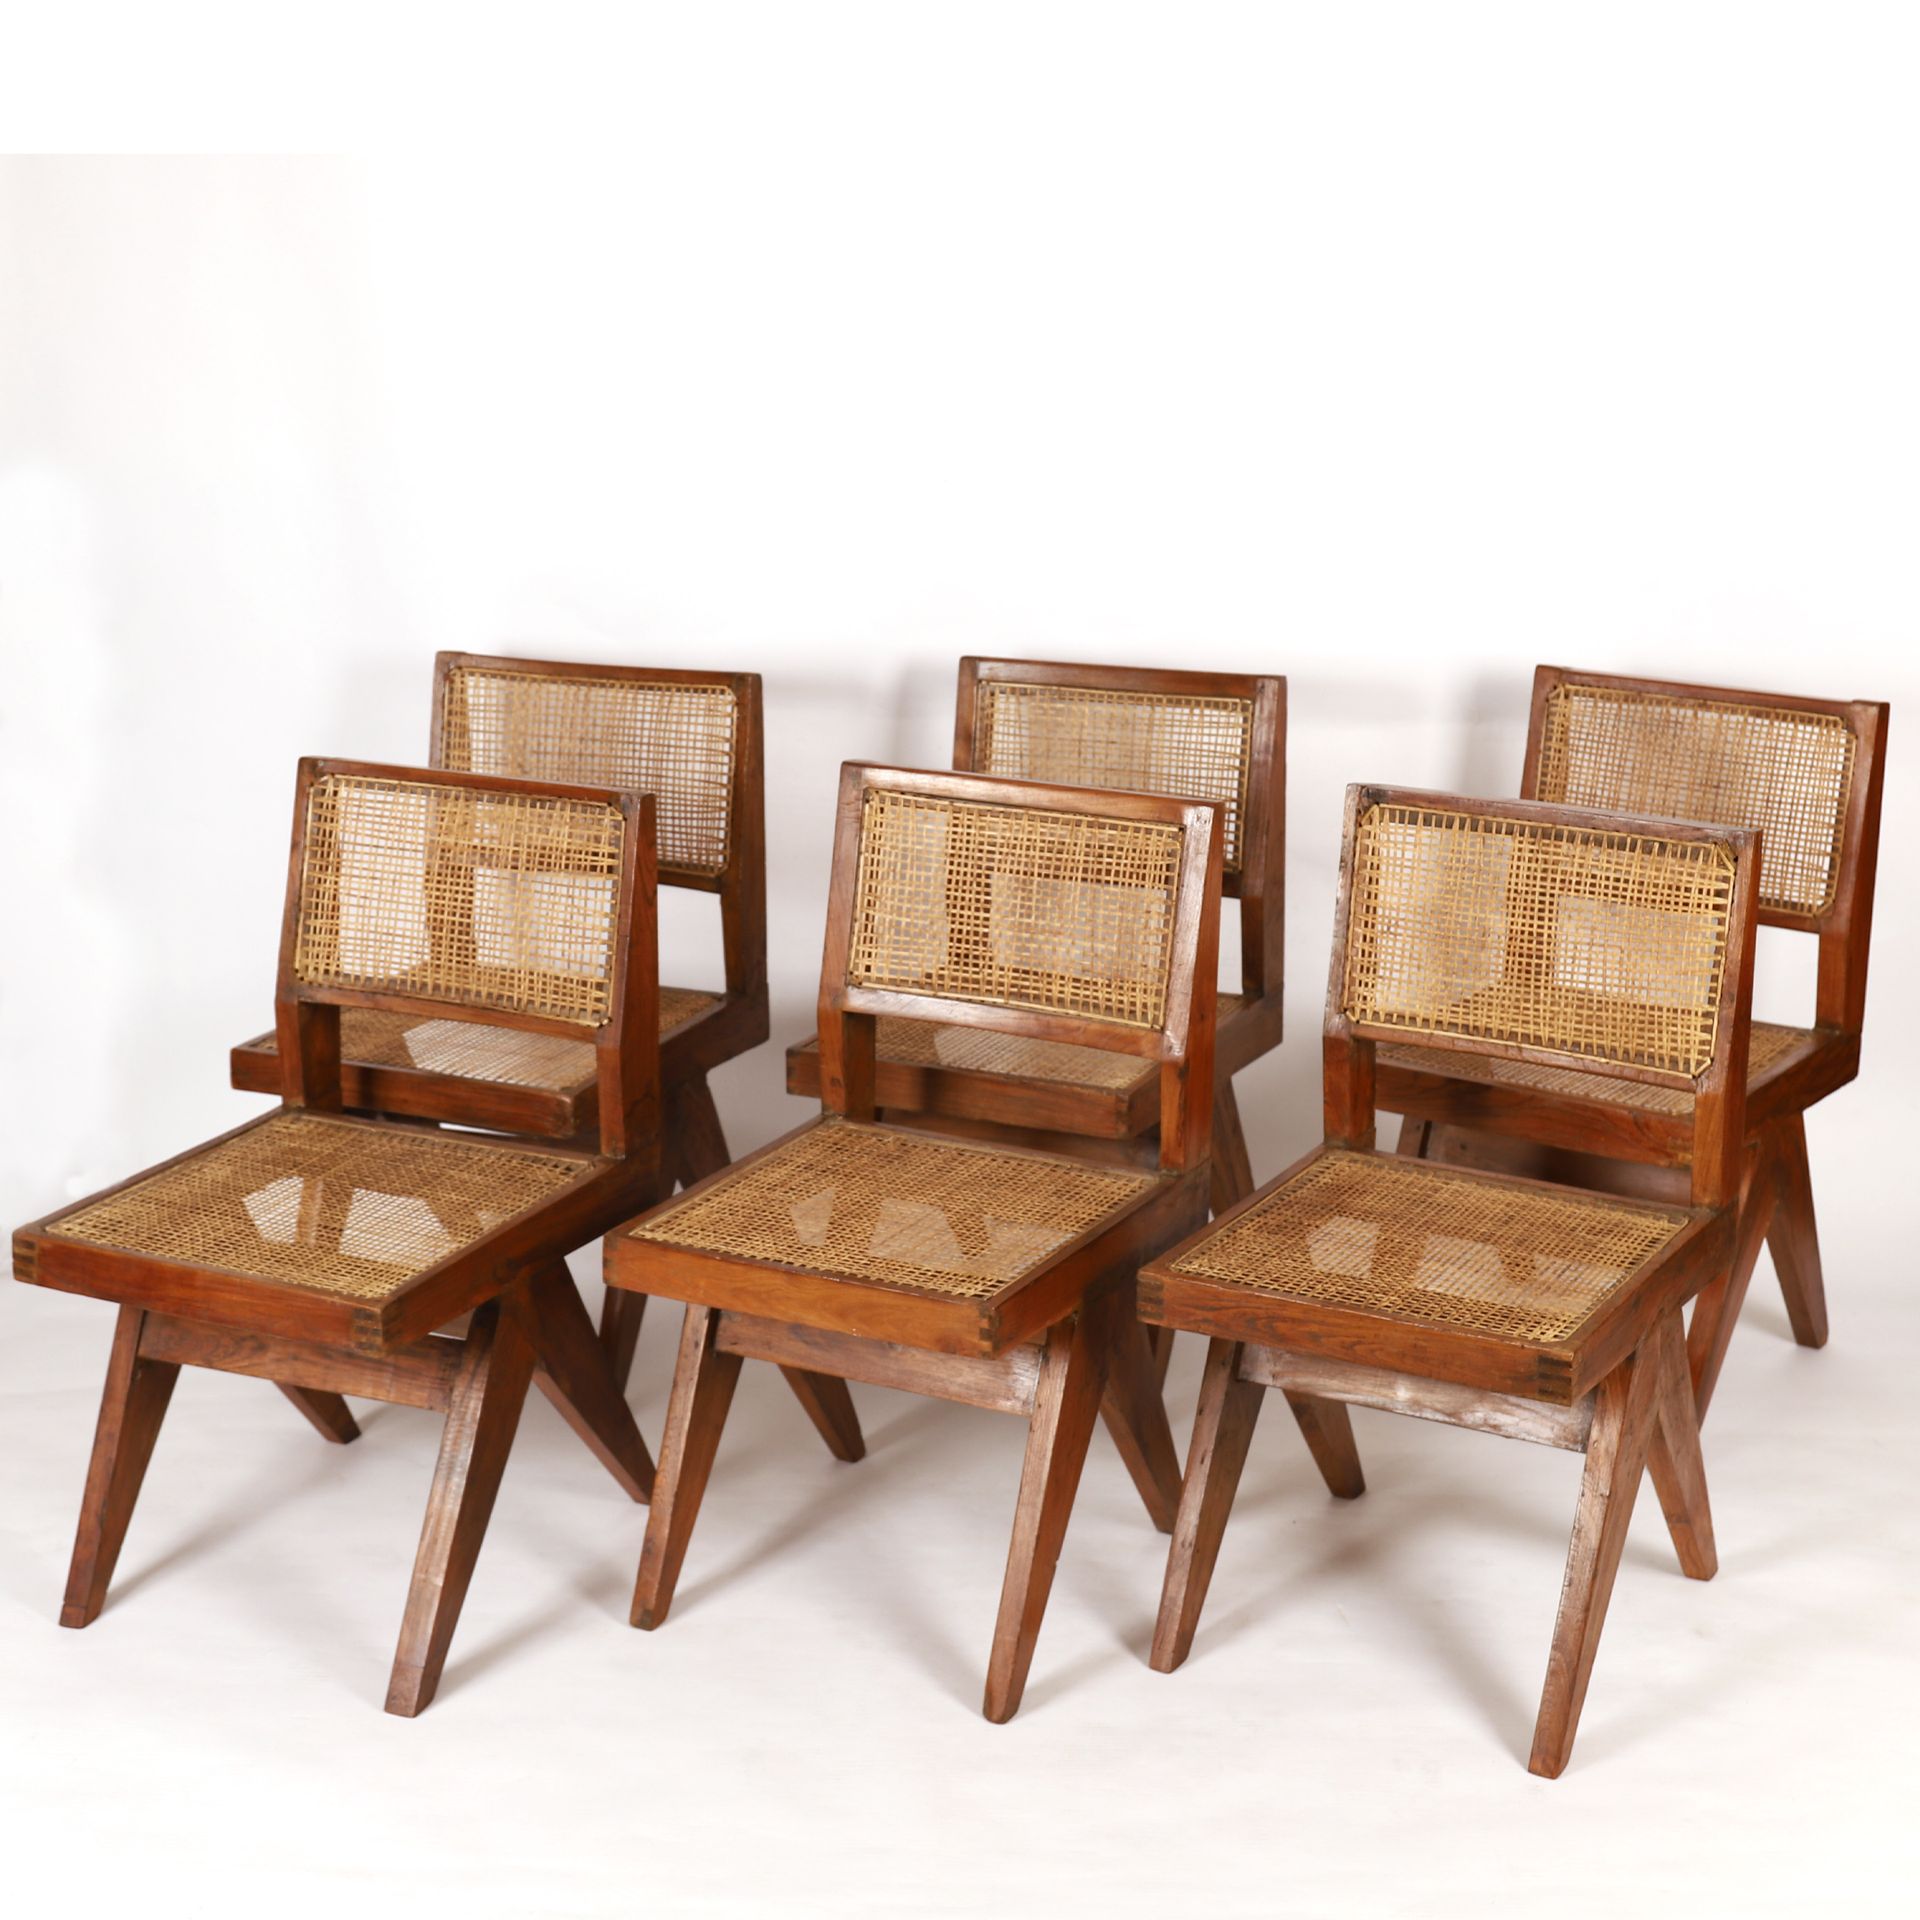 Null 皮埃尔-詹纳利(Pierre Jeanneret) (1896-1967)

非凡的6把 "餐椅 "套装

实心柚木椅子，罗盘式双侧腿由两根支柱连接。&hellip;